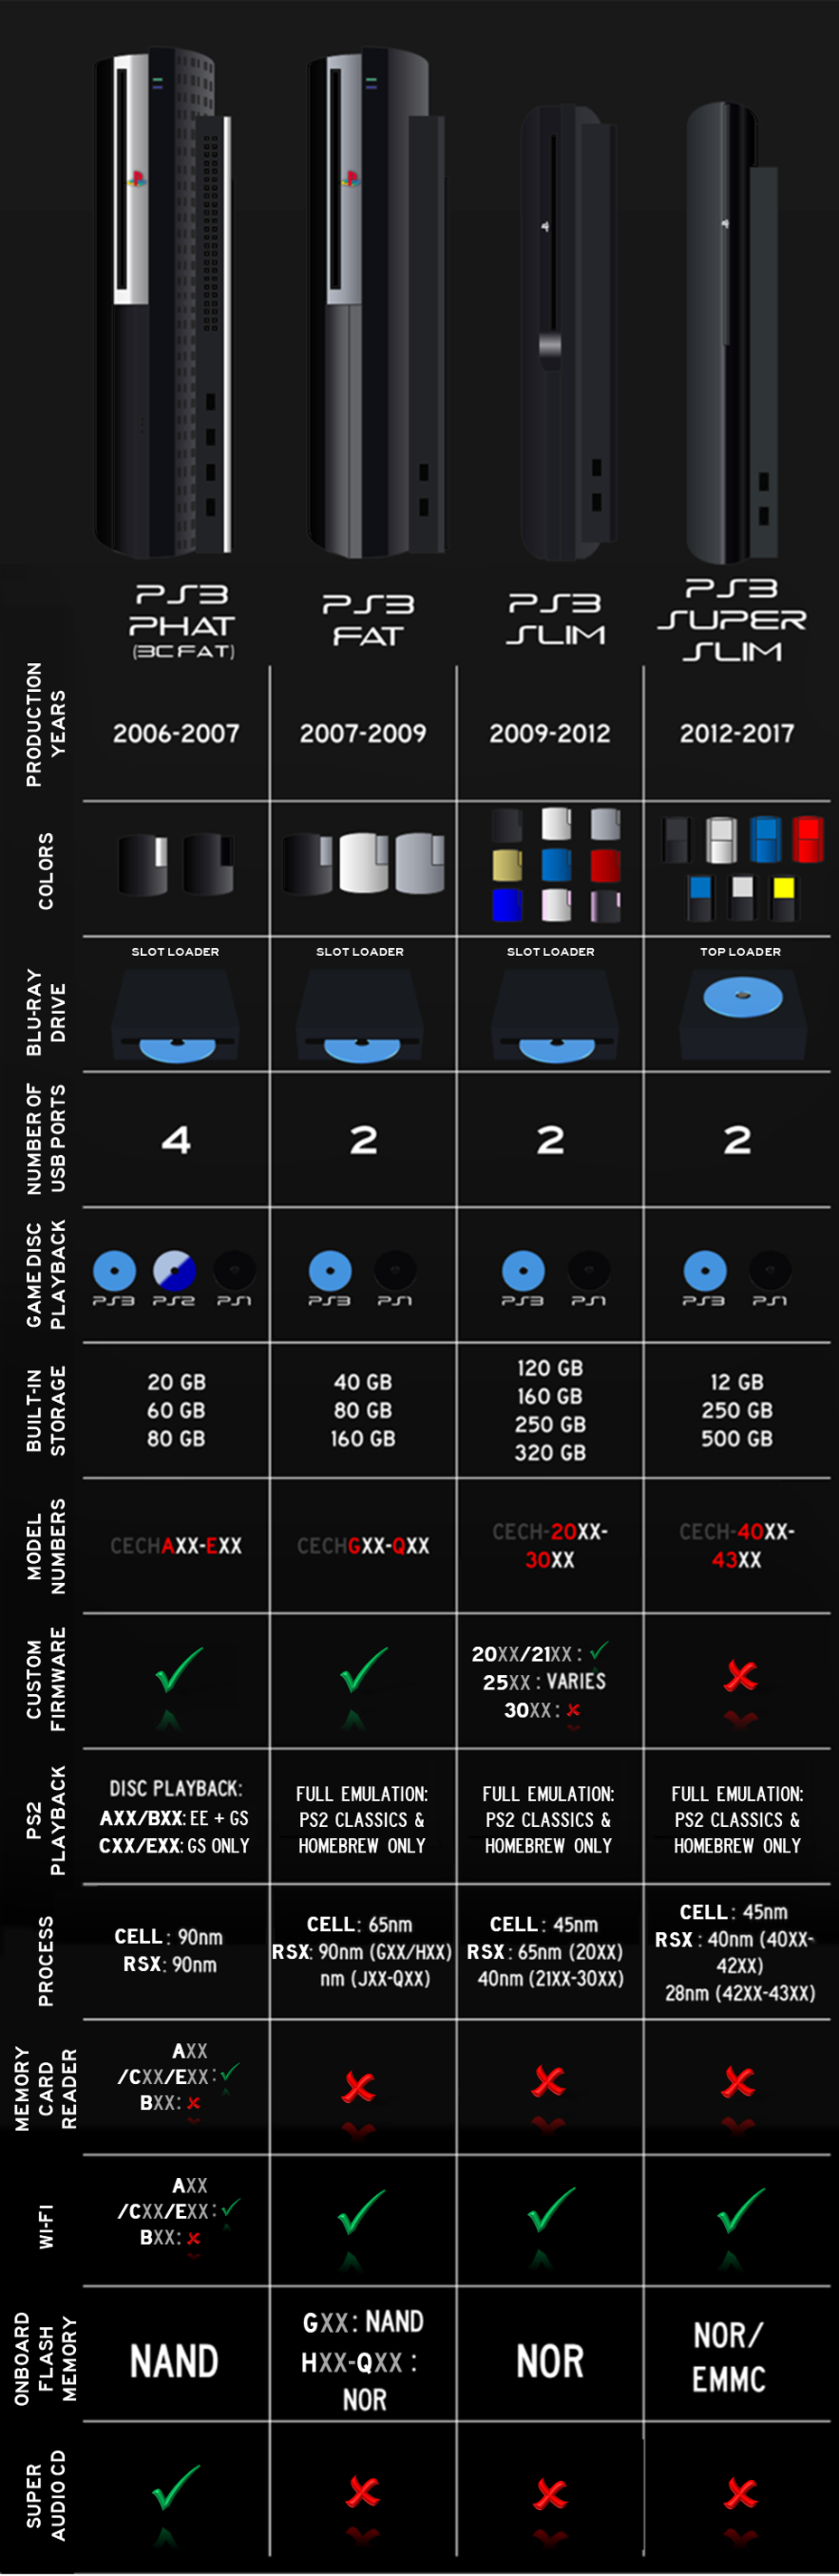 PS3 Model Comparison infographic